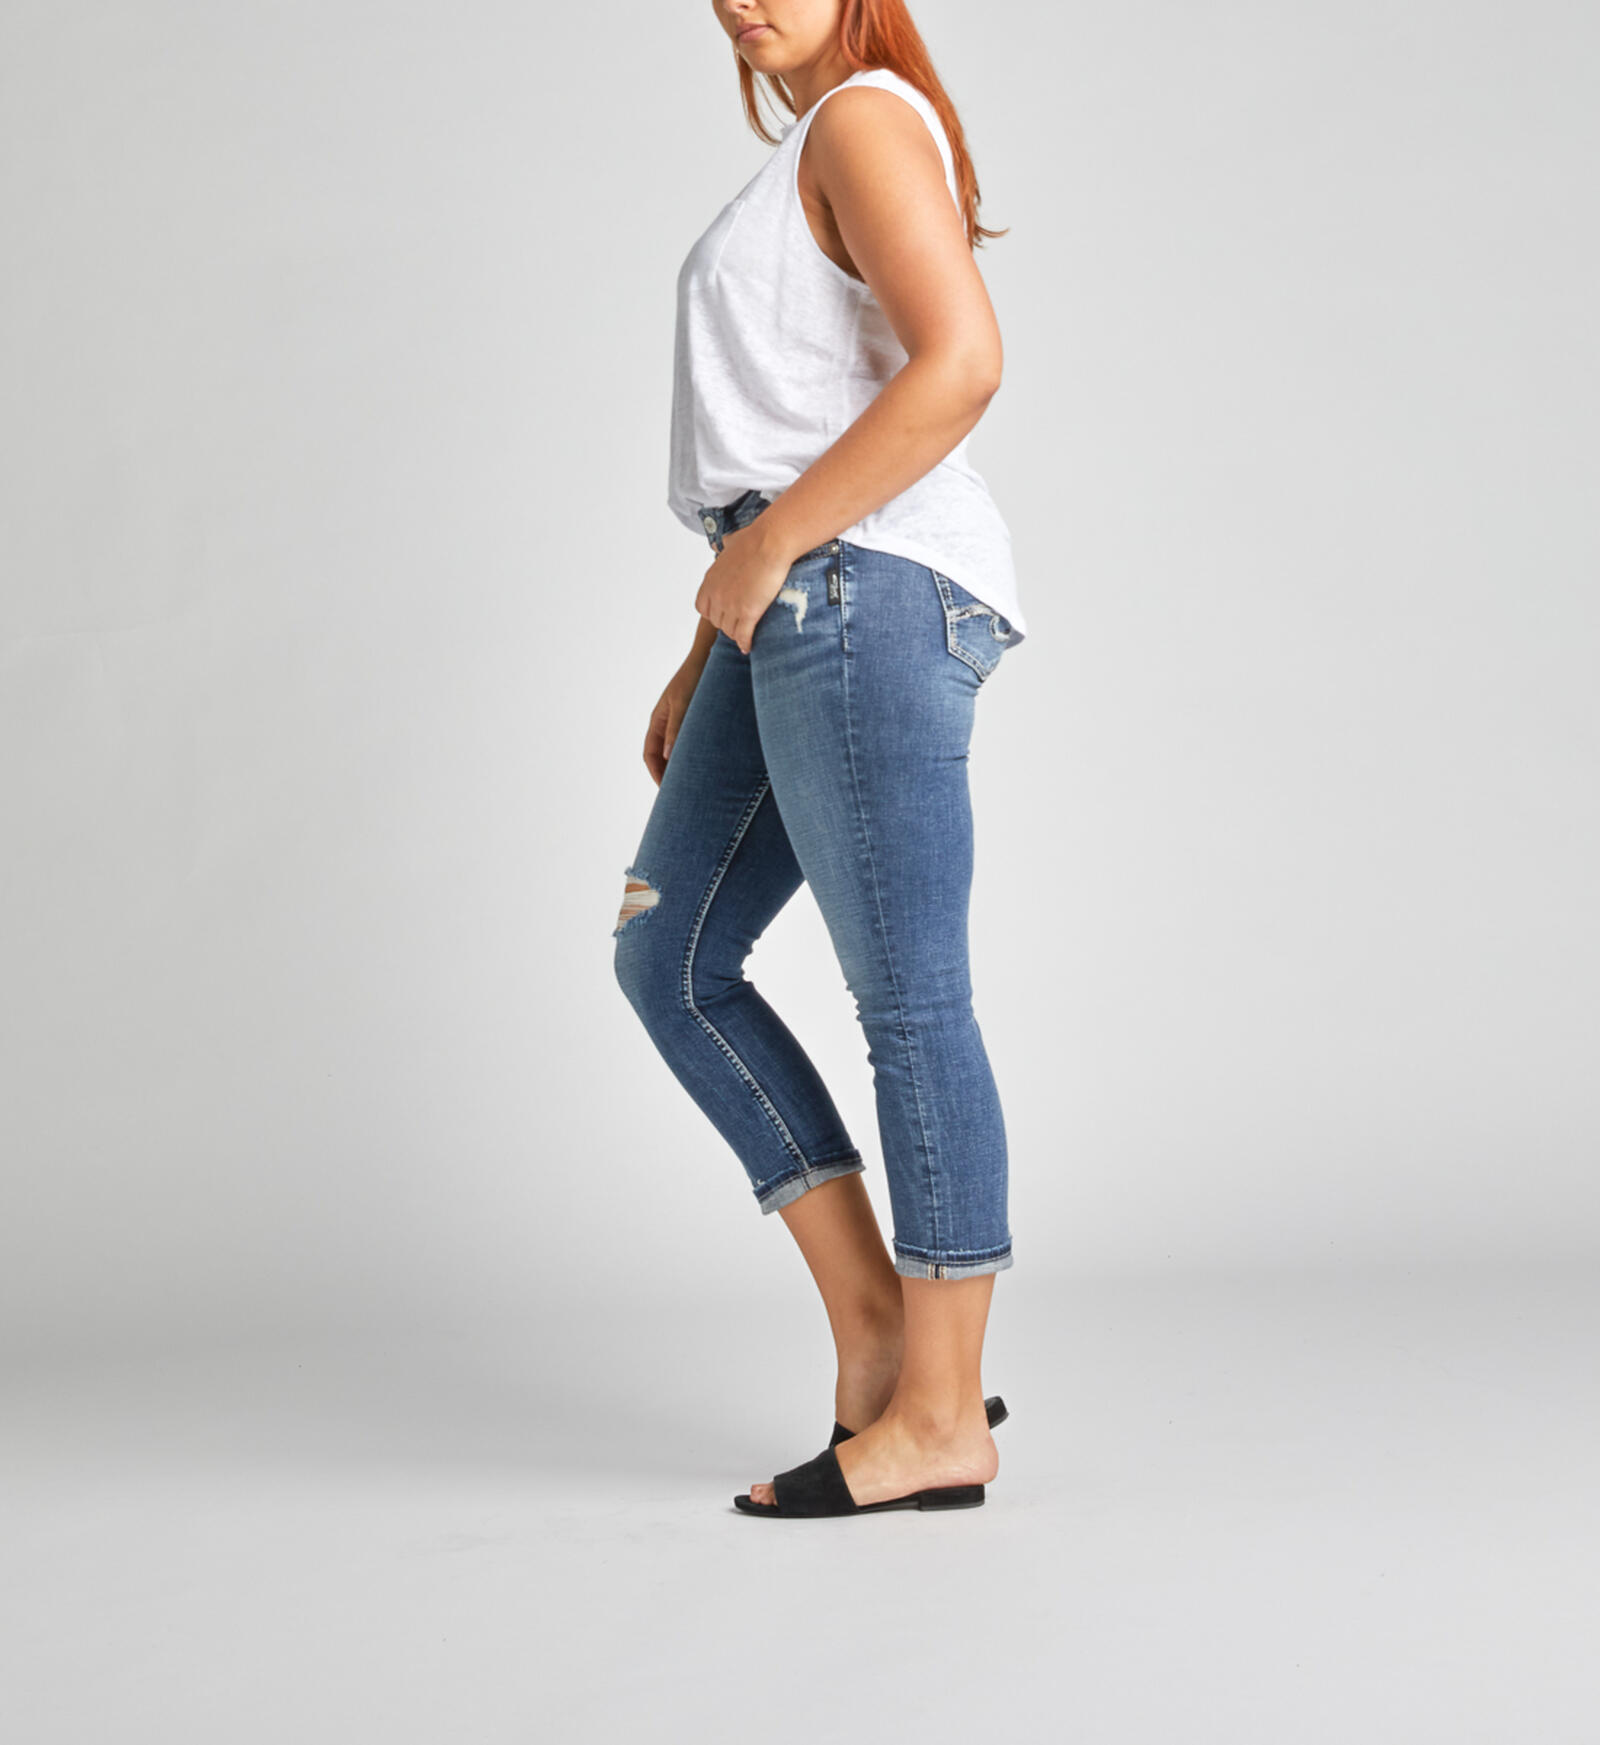 Buy Stanvee Women Slim Fit Mid Rise Ice Denim Capri Online at Low